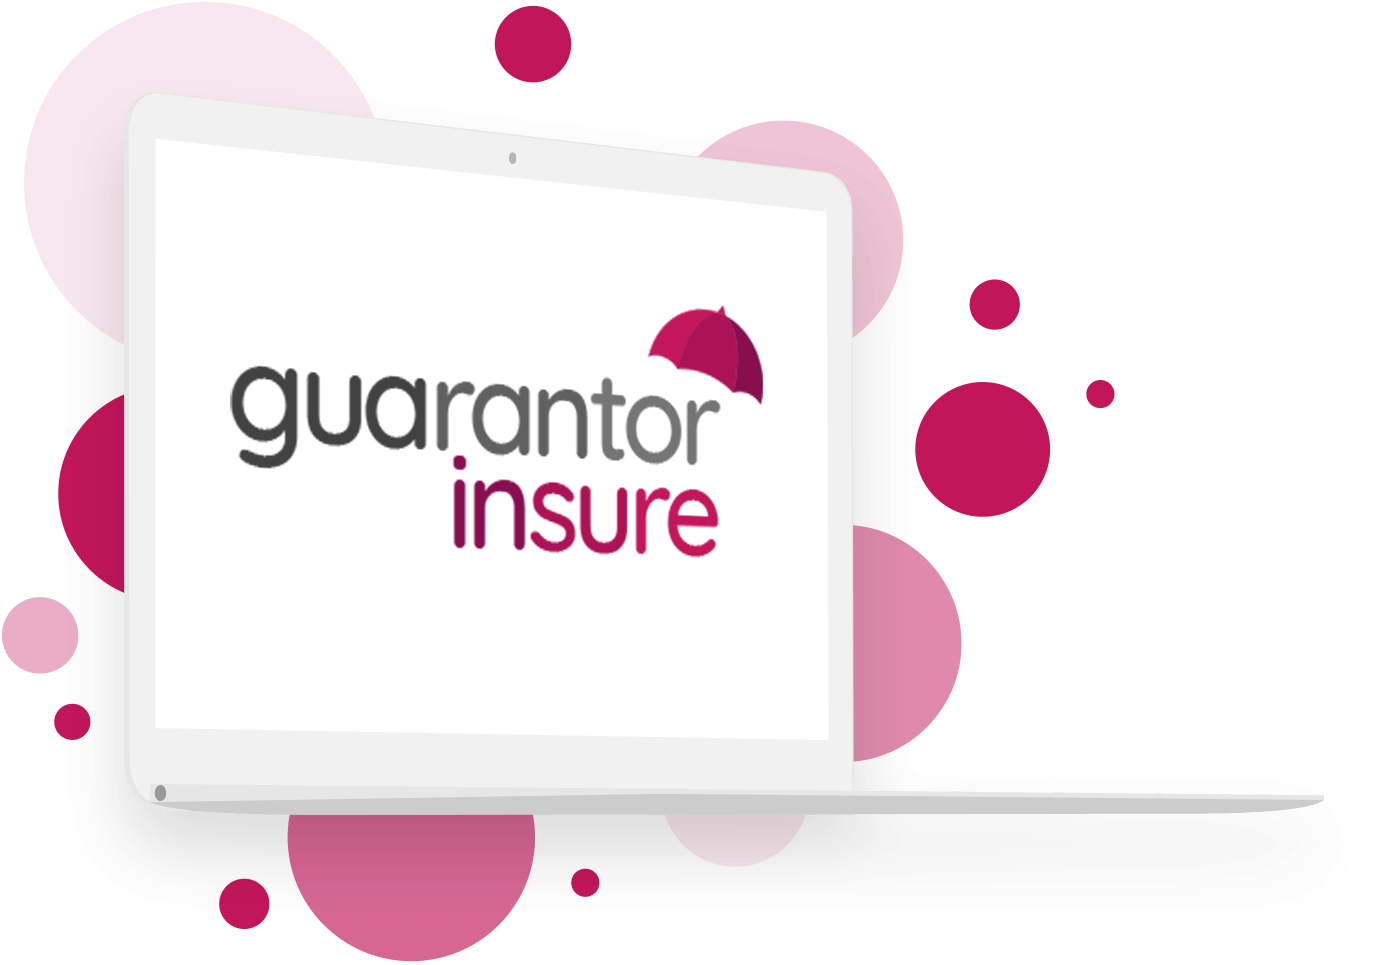 Why Guarantor Insure